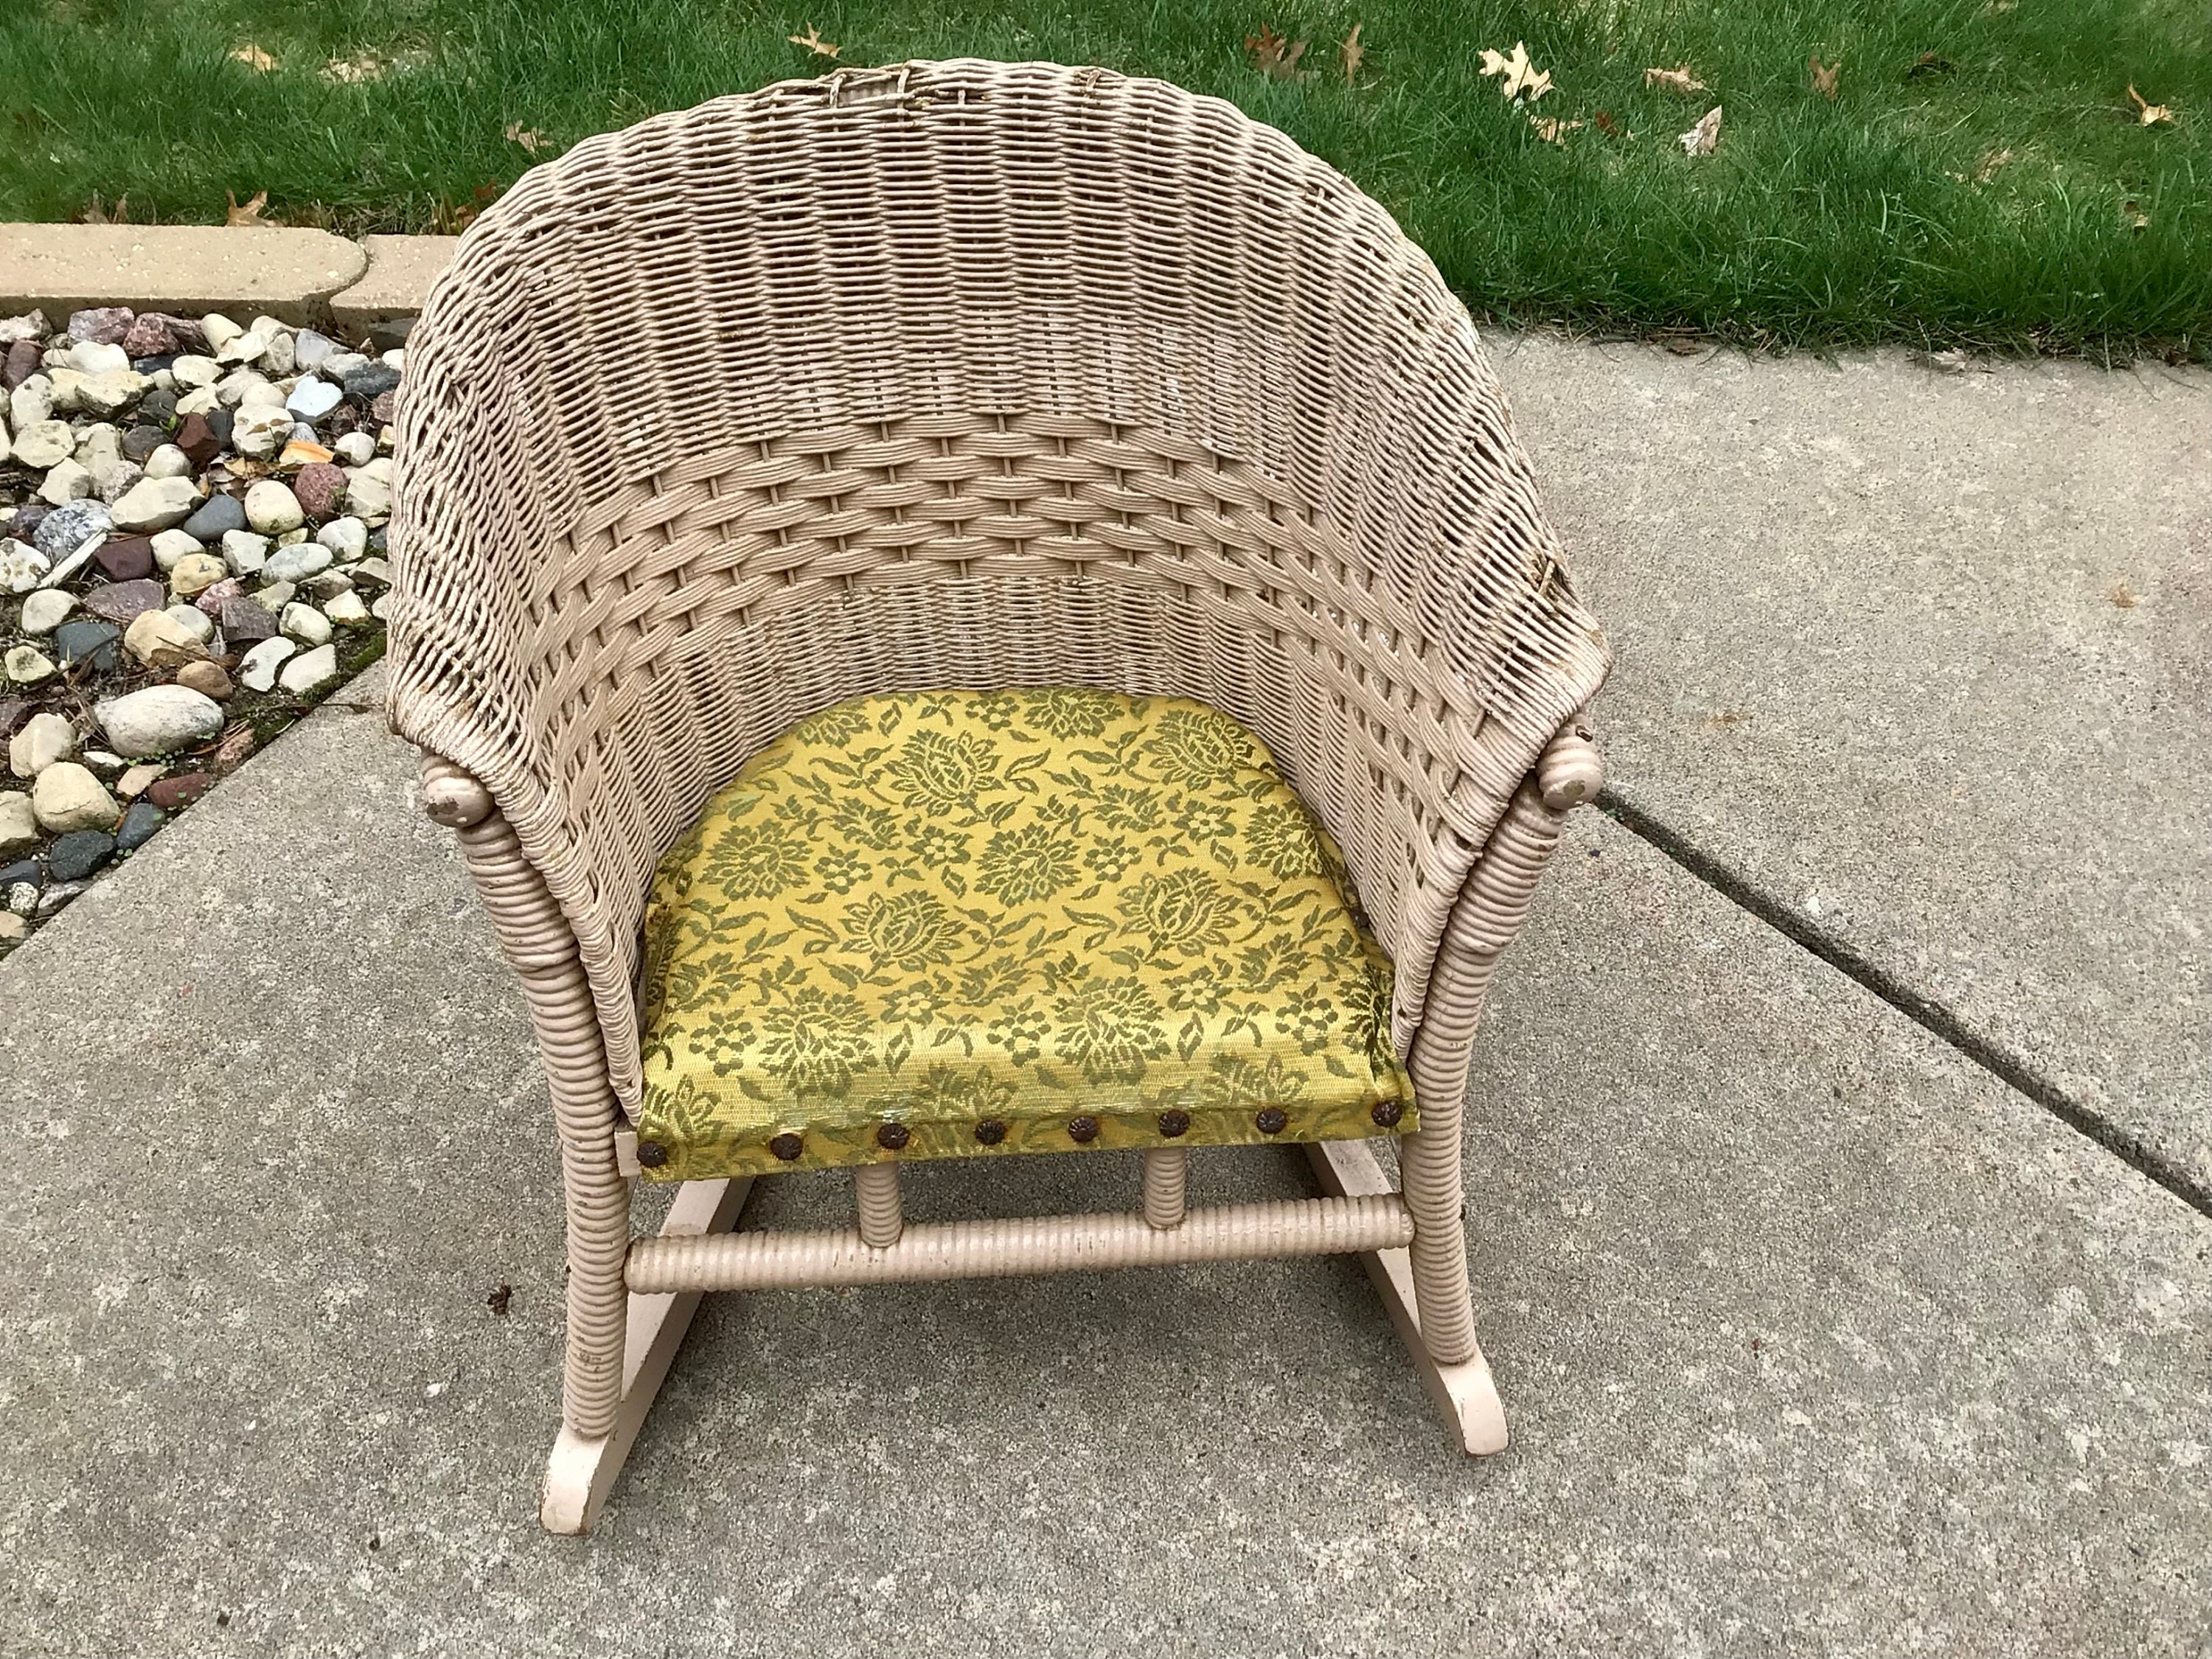 Barrel Back Chair Cushion,Wicker Chair Cushions,Outdoor Patio